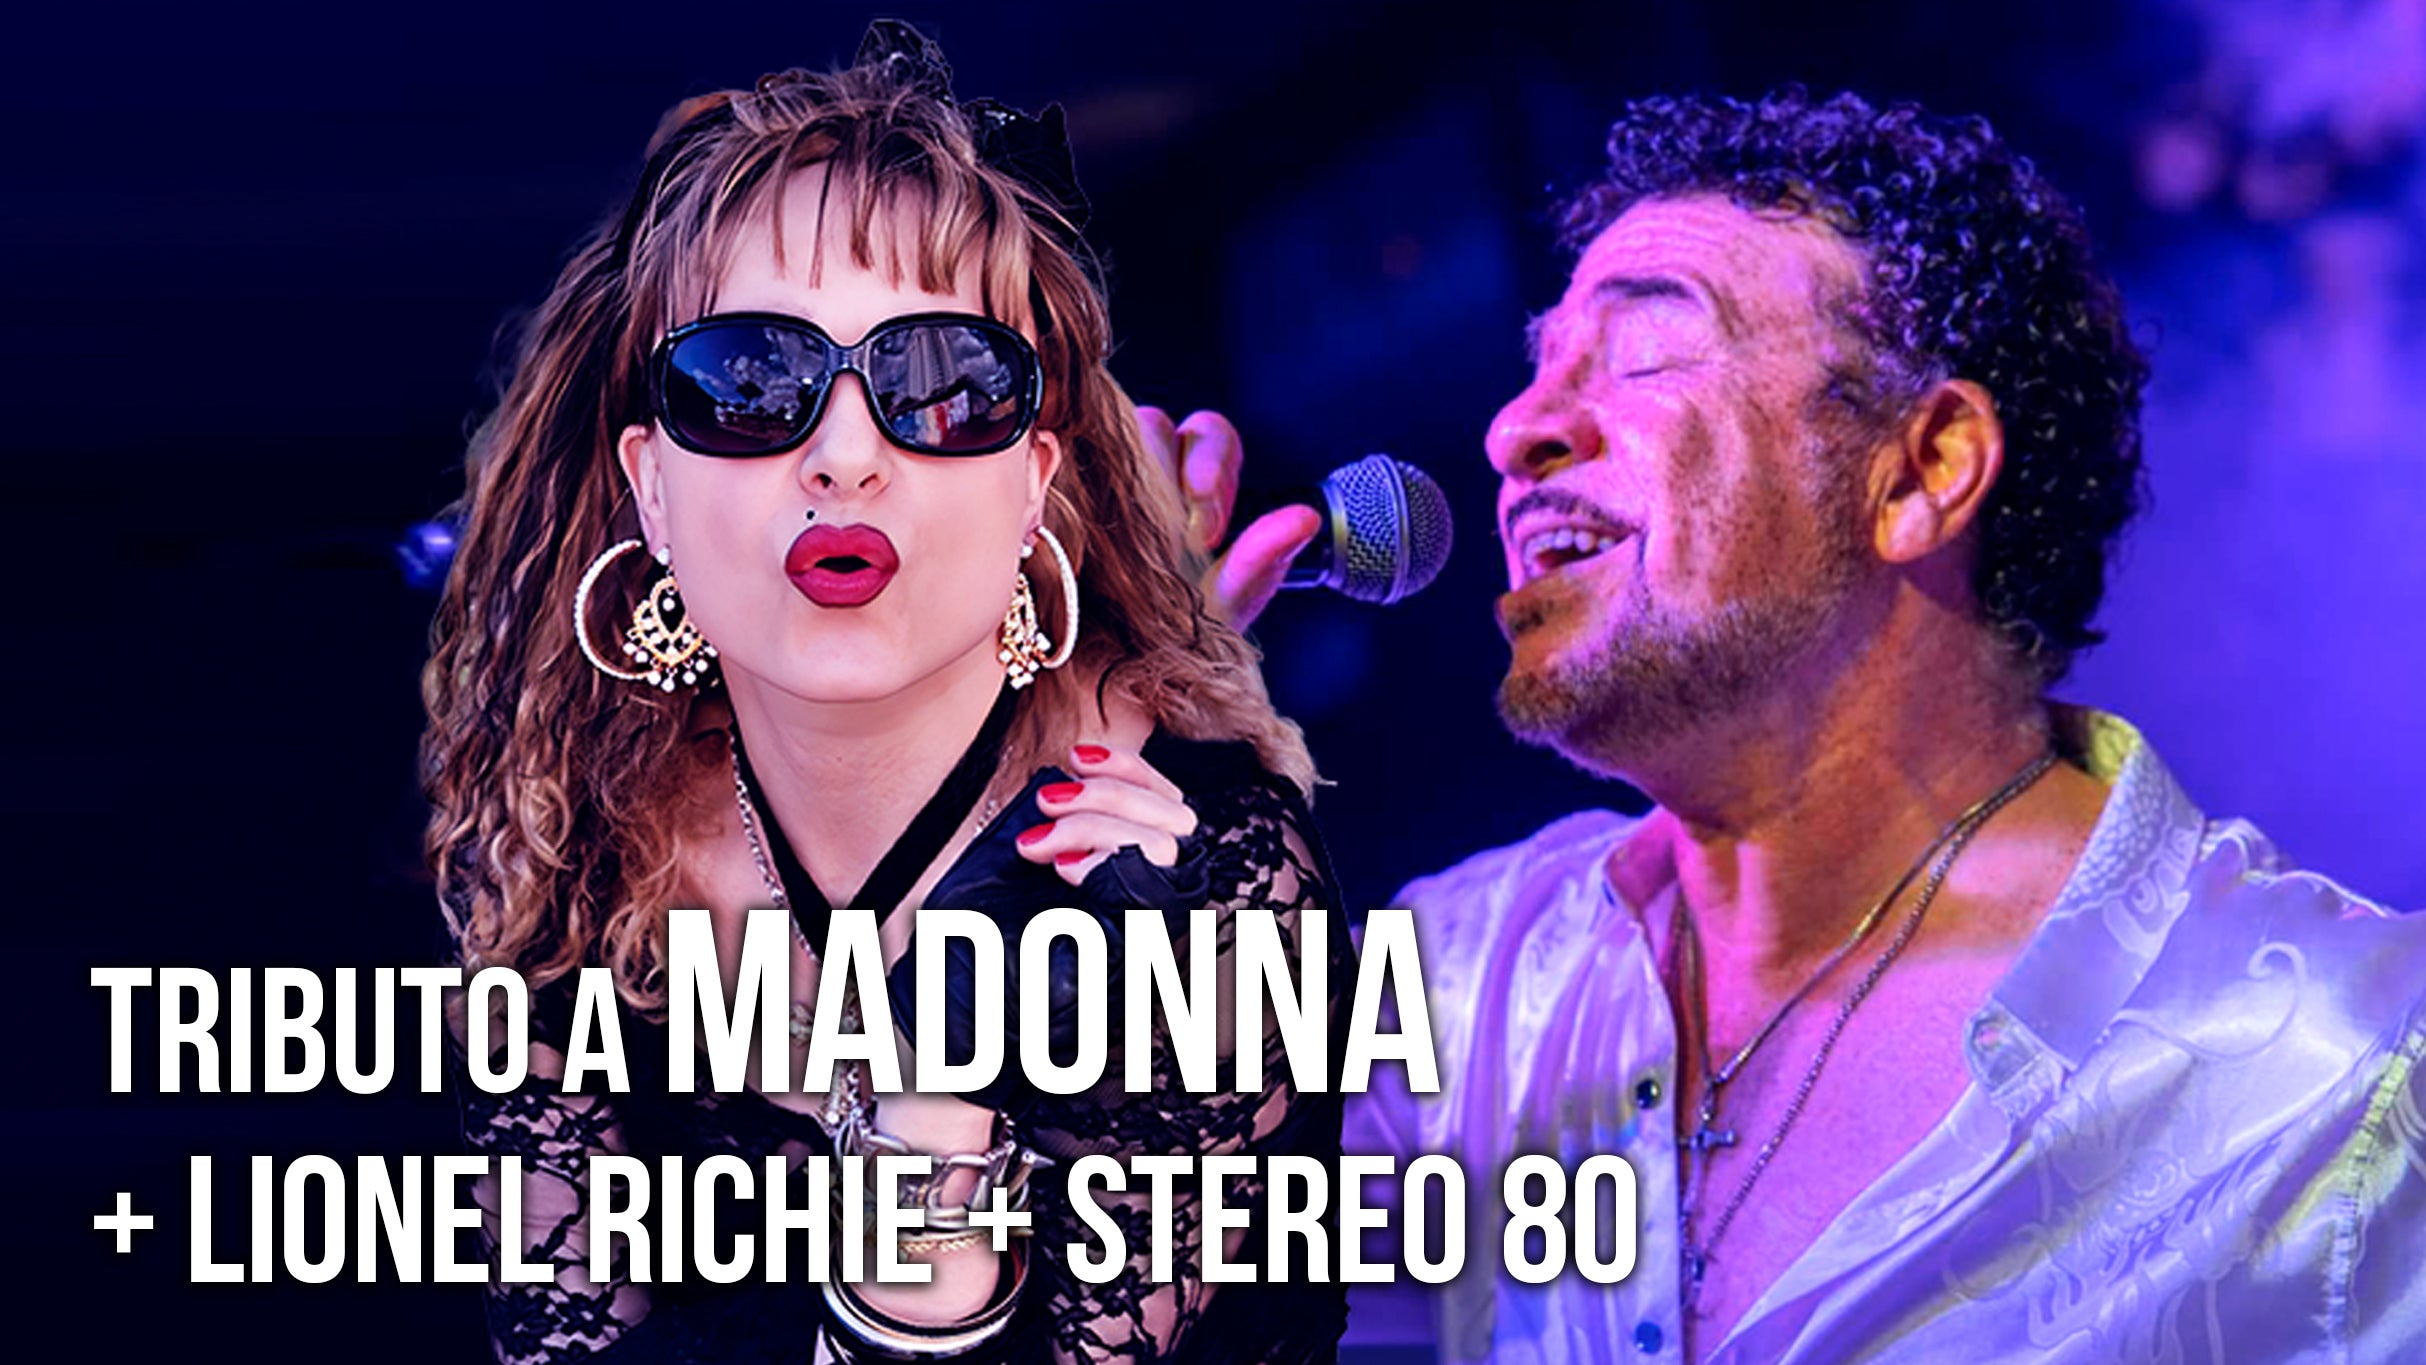 Tributo a Madonna y Lionel Richie presale information on freepresalepasswords.com